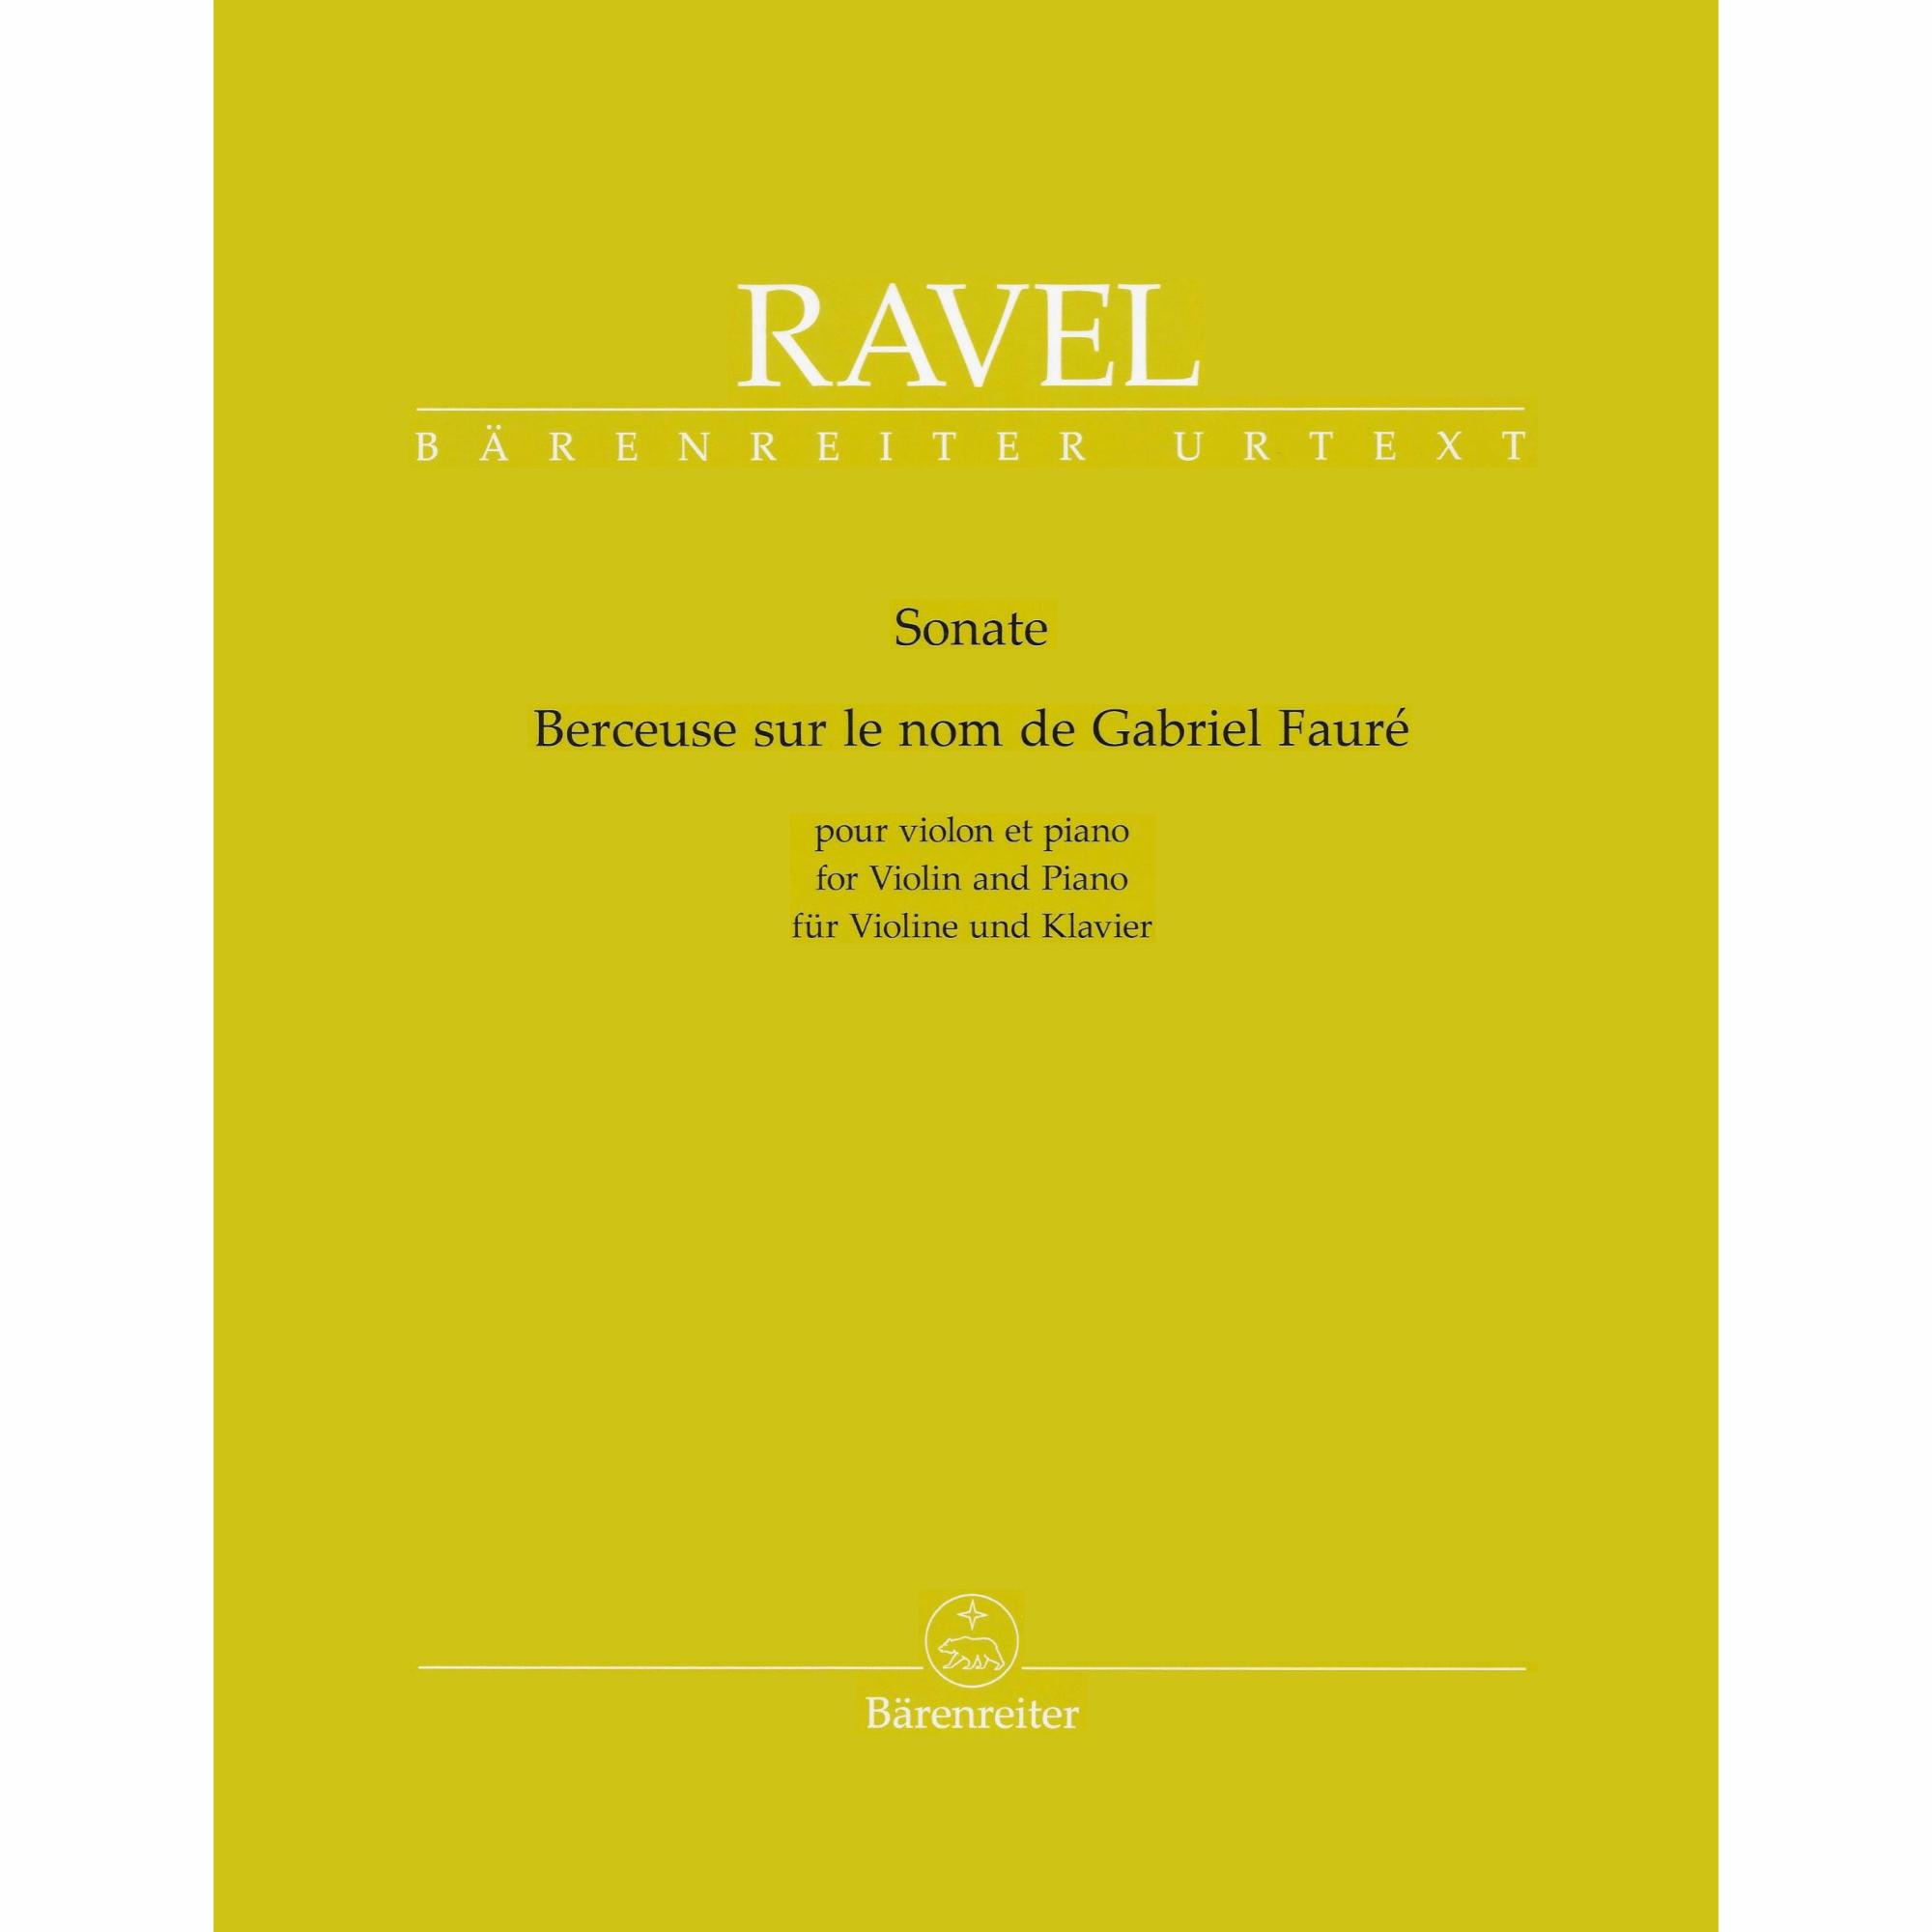 Ravel -- Sonata & Berceuse sur le nom de Gabriel Faure for Violin and Piano